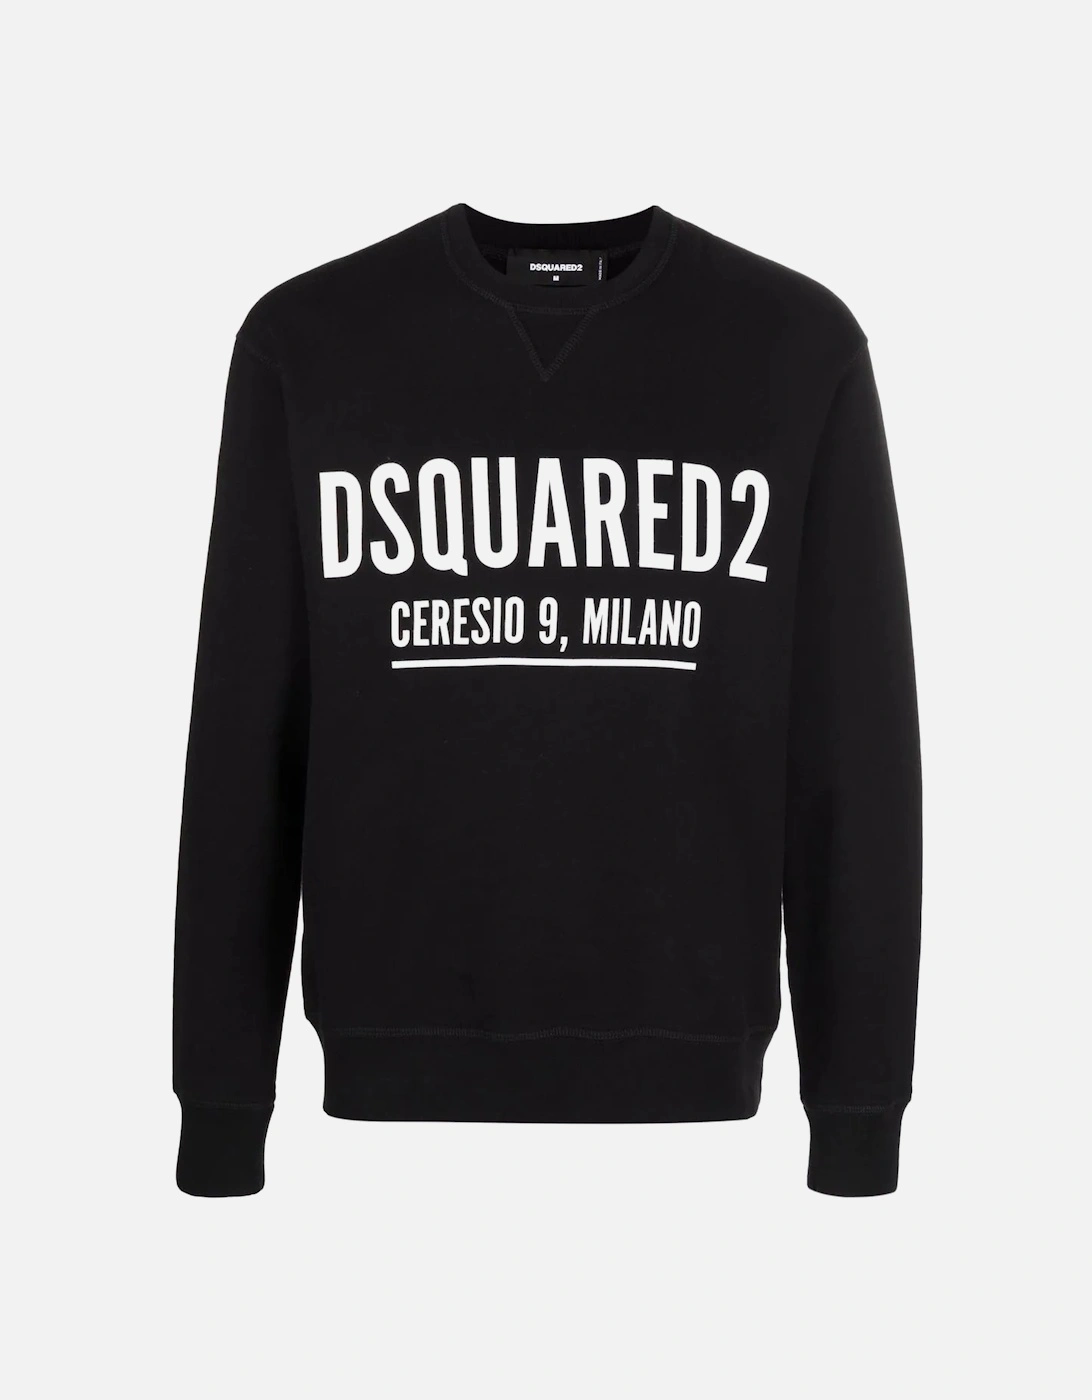 Ceresio9 Milano Print Sweatshirt in Black, 6 of 5